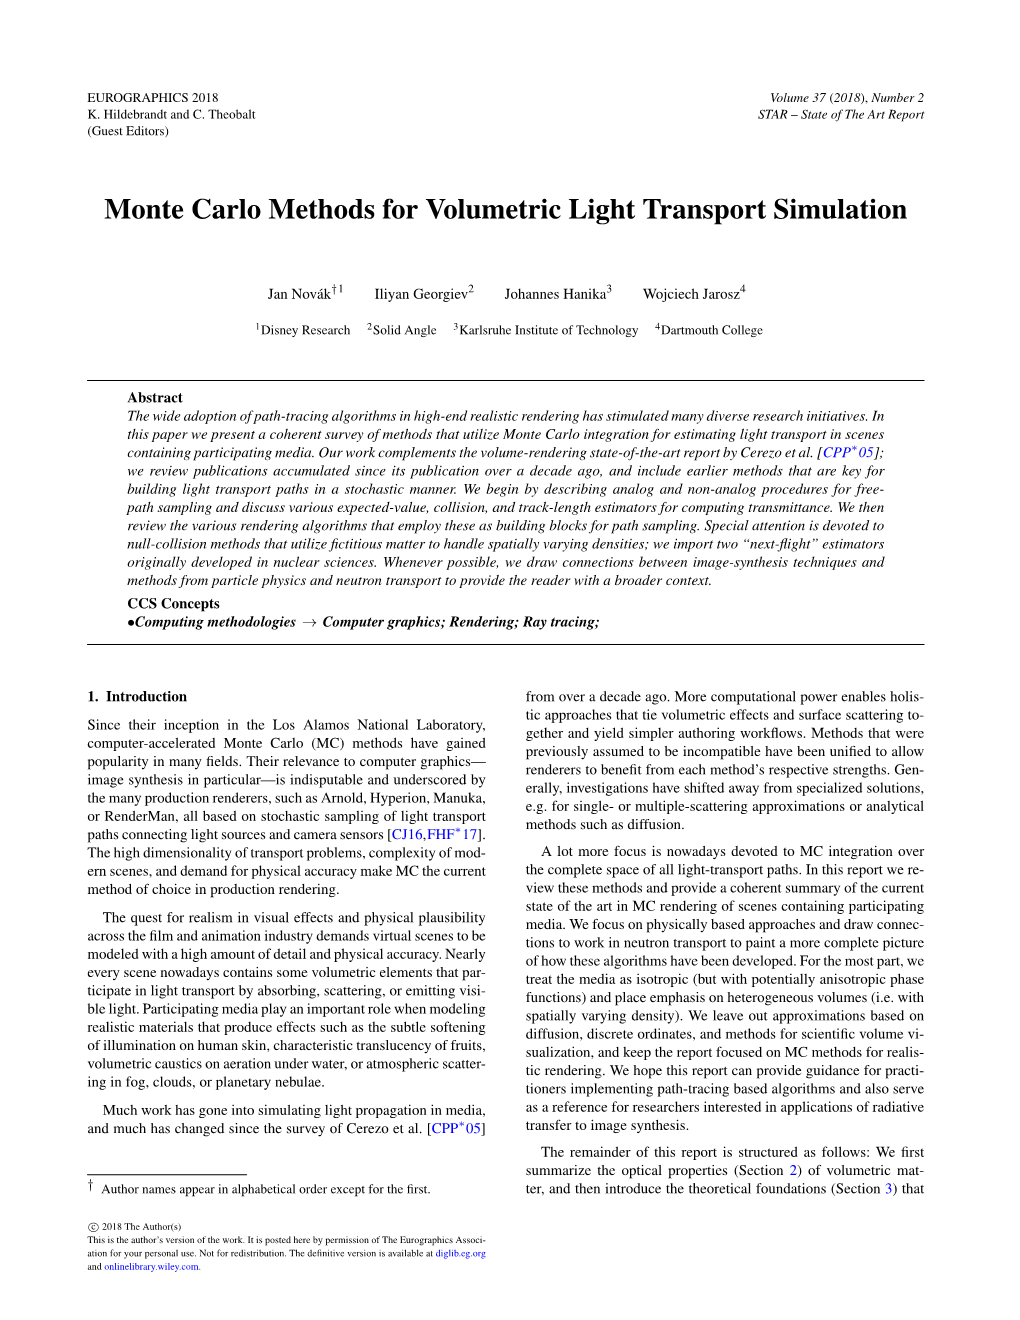 Monte Carlo Methods for Volumetric Light Transport Simulation